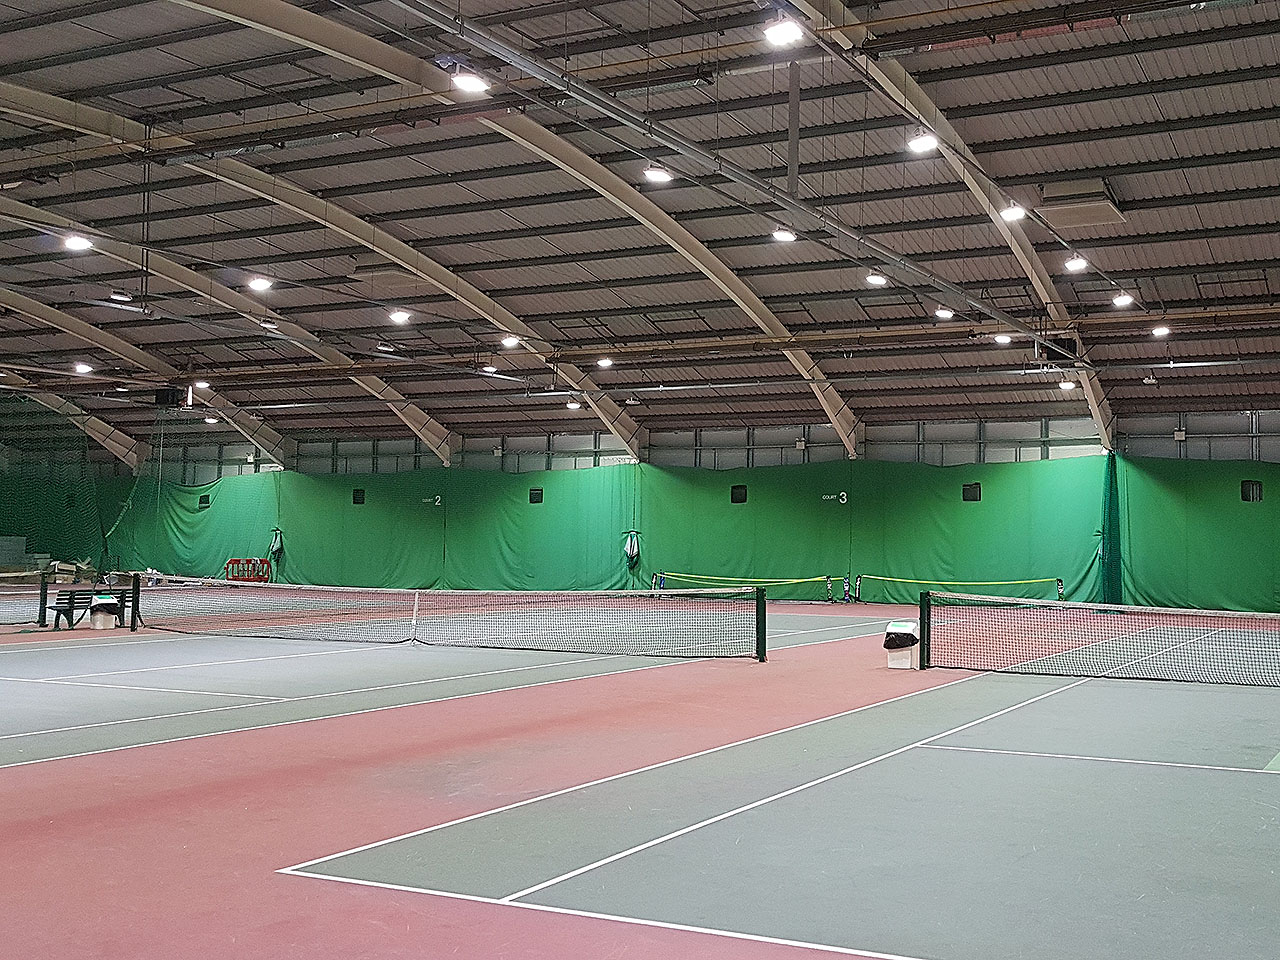 Knighton Tennis Centre